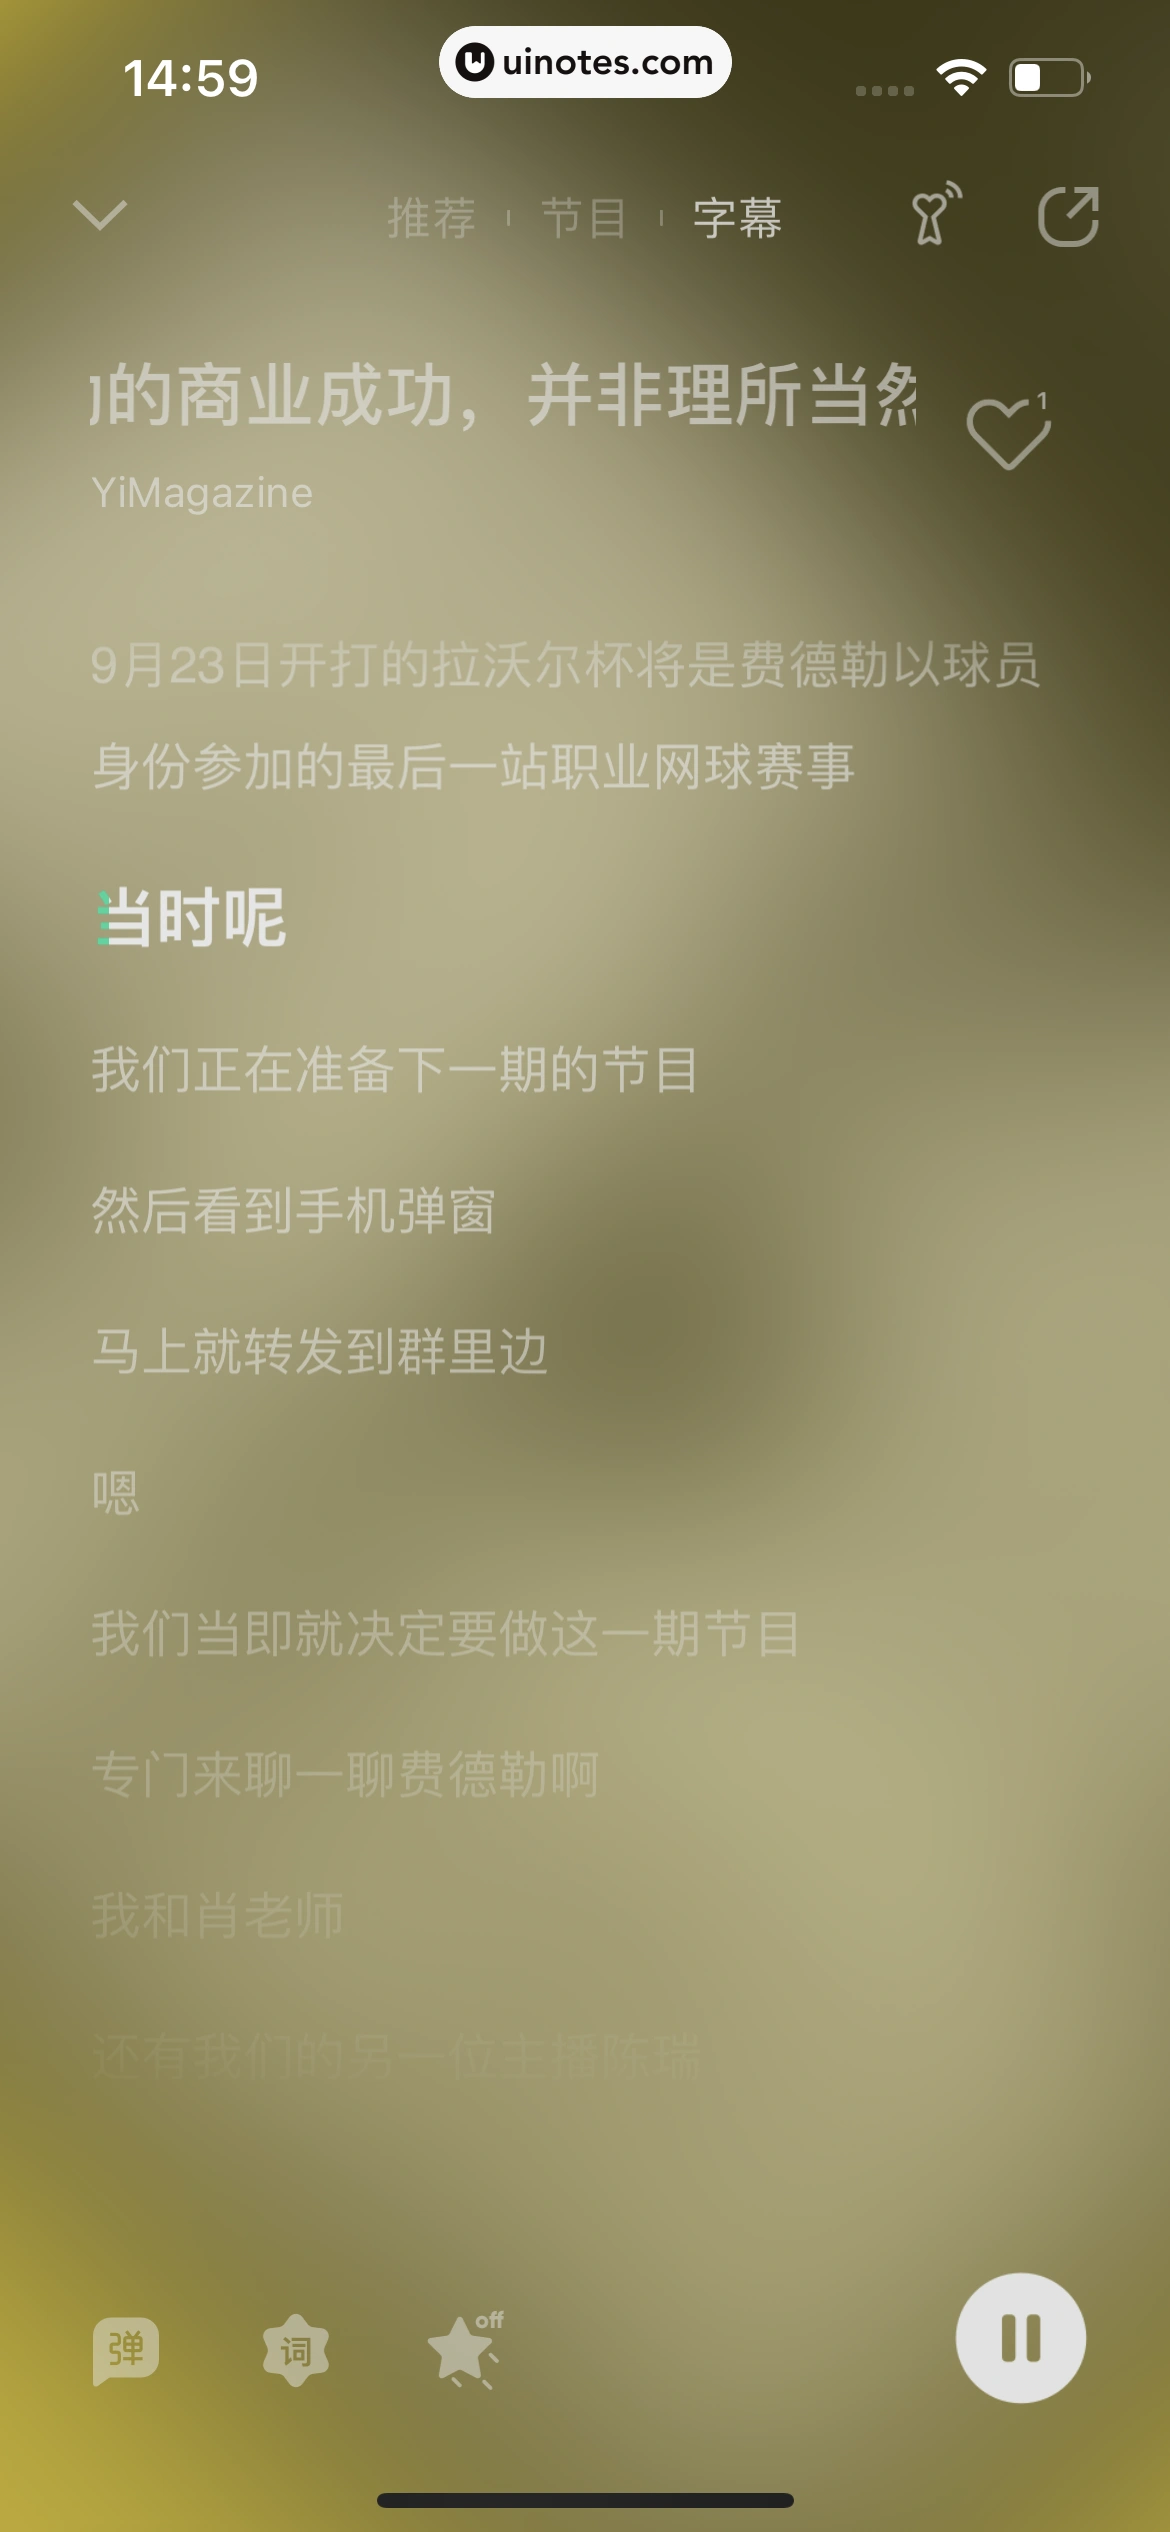 QQ音乐 App 截图 266 - UI Notes